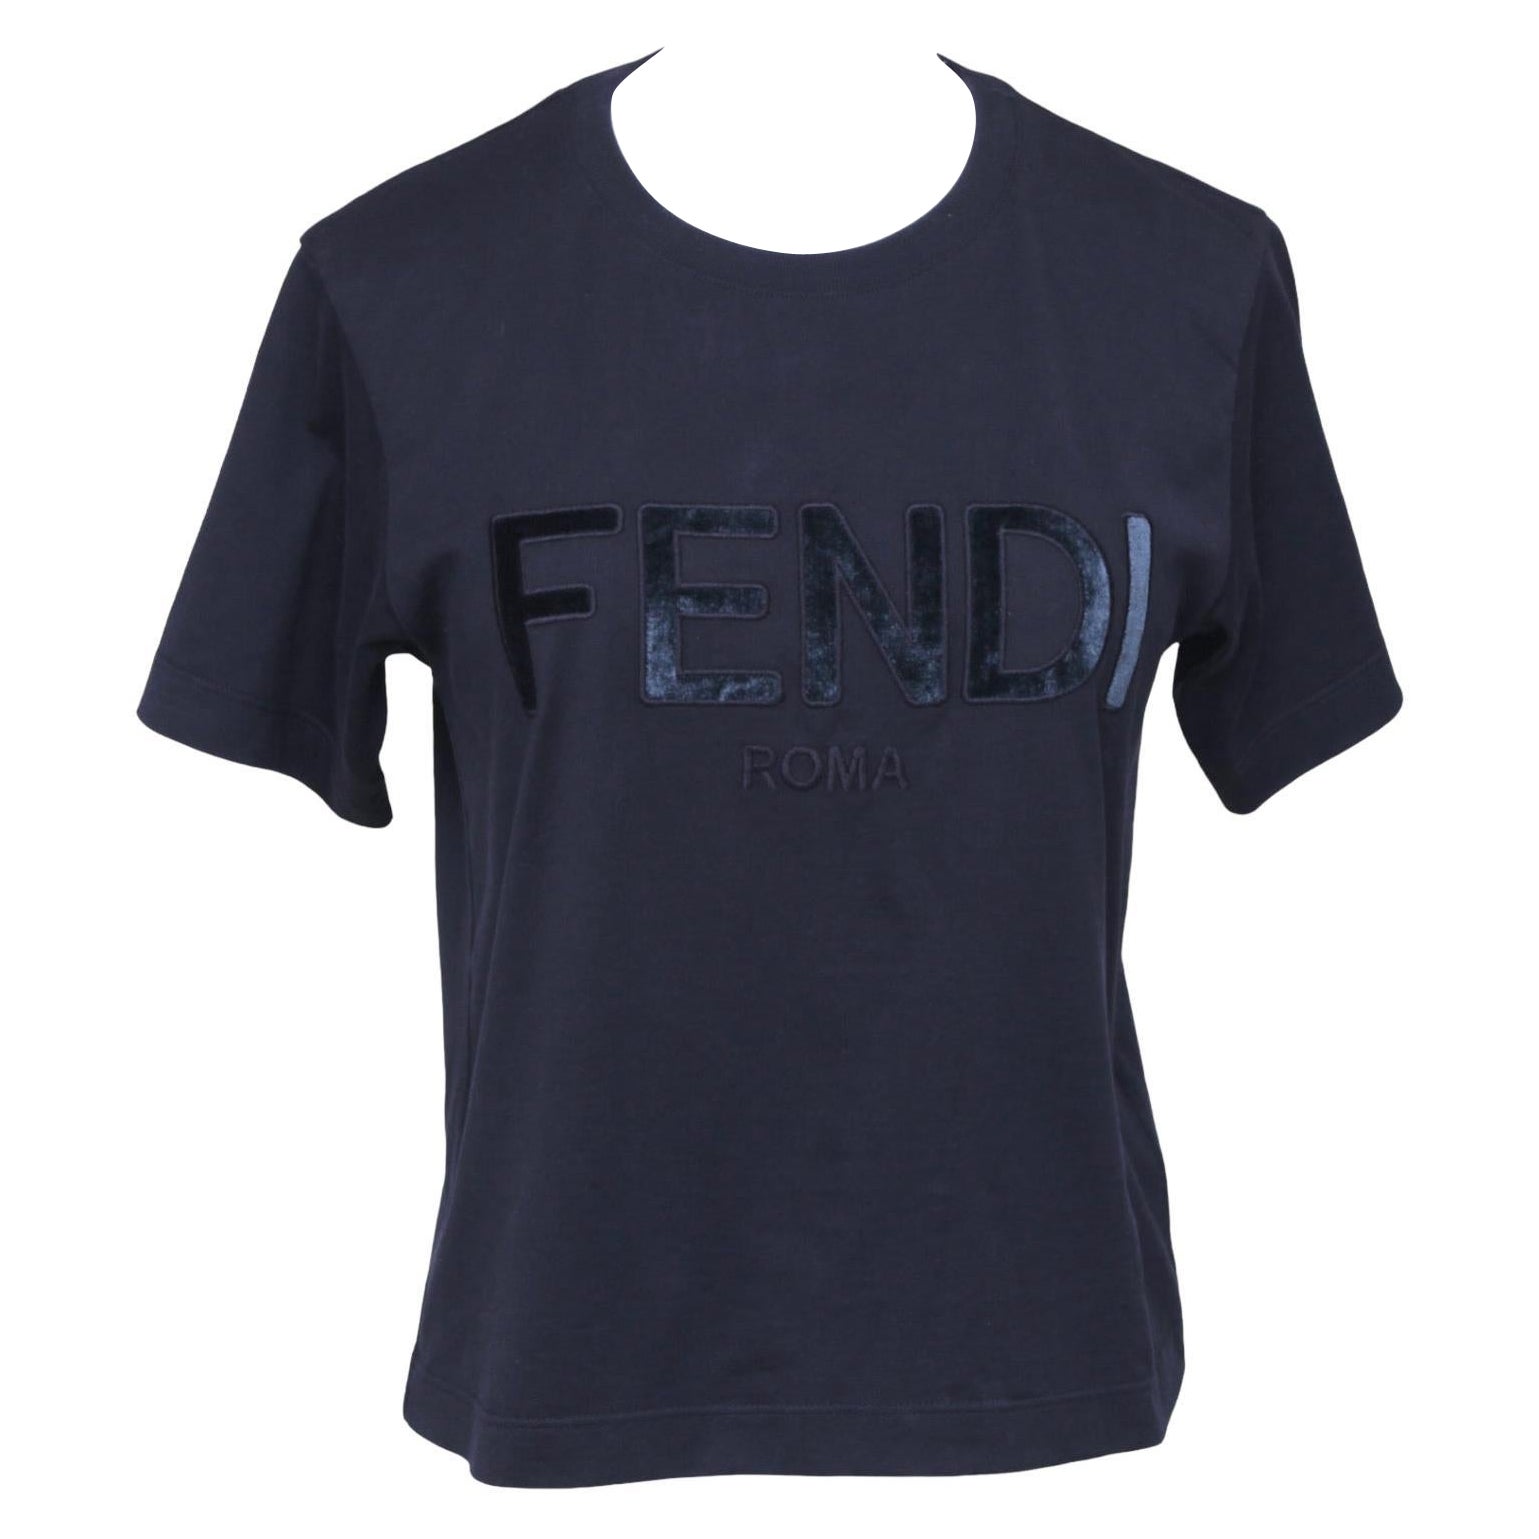 FENDI T-Shirt Logo Top Blouse Cropped Navy Blue Velvet Crew Short Sleeve Sz XS For Sale